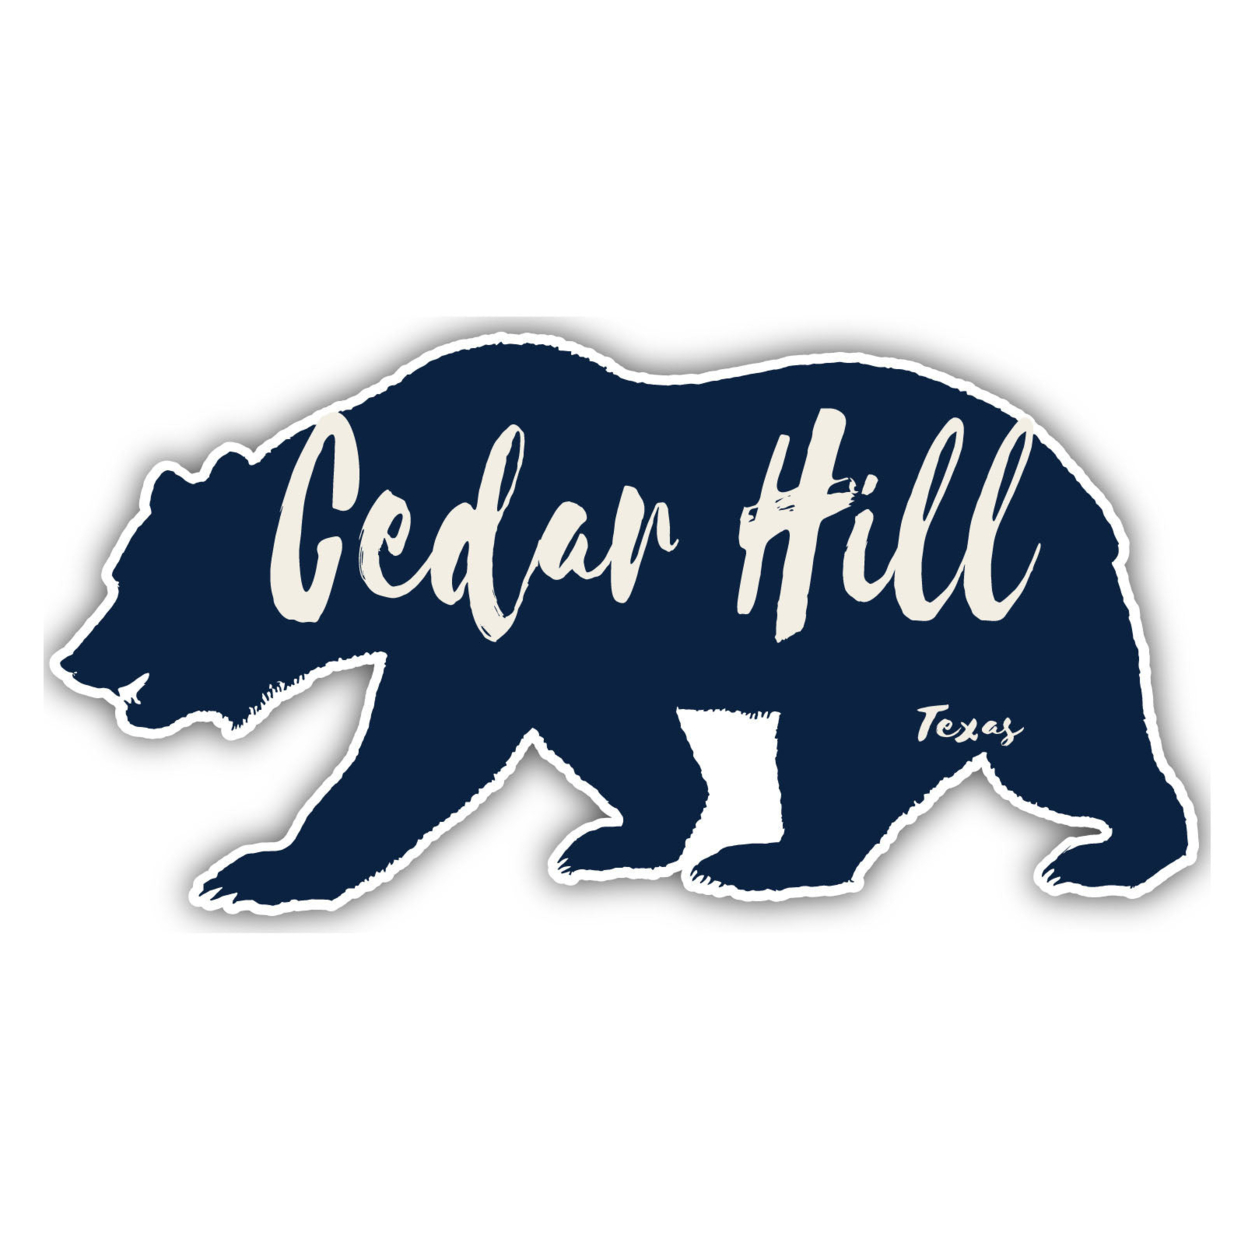 Cedar Hill Texas Souvenir Decorative Stickers (Choose Theme And Size) - 4-Pack, 2-Inch, Bear